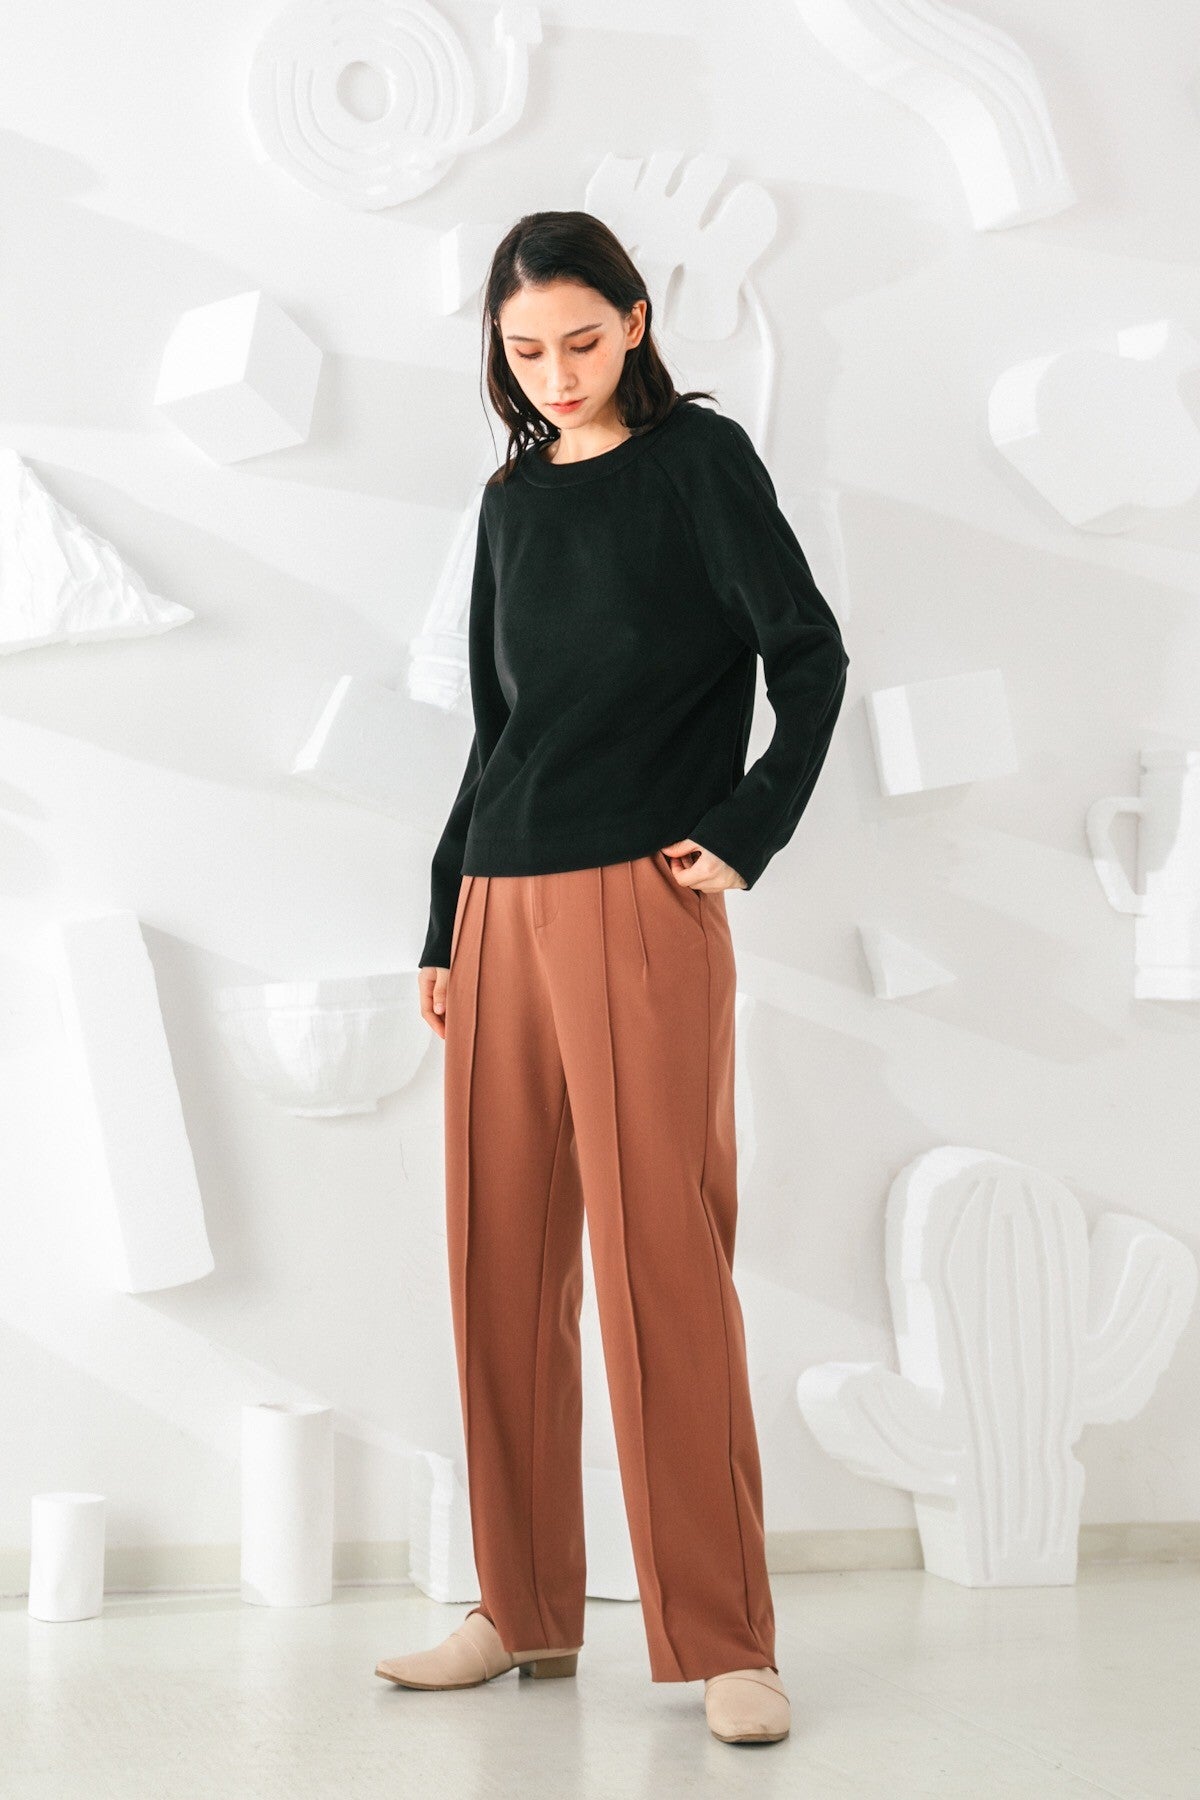 SKYE San Francisco SF shop ethical sustainable modern minimalist elegant quality women clothing fashion brand Adélaide Pants Light Brown 3